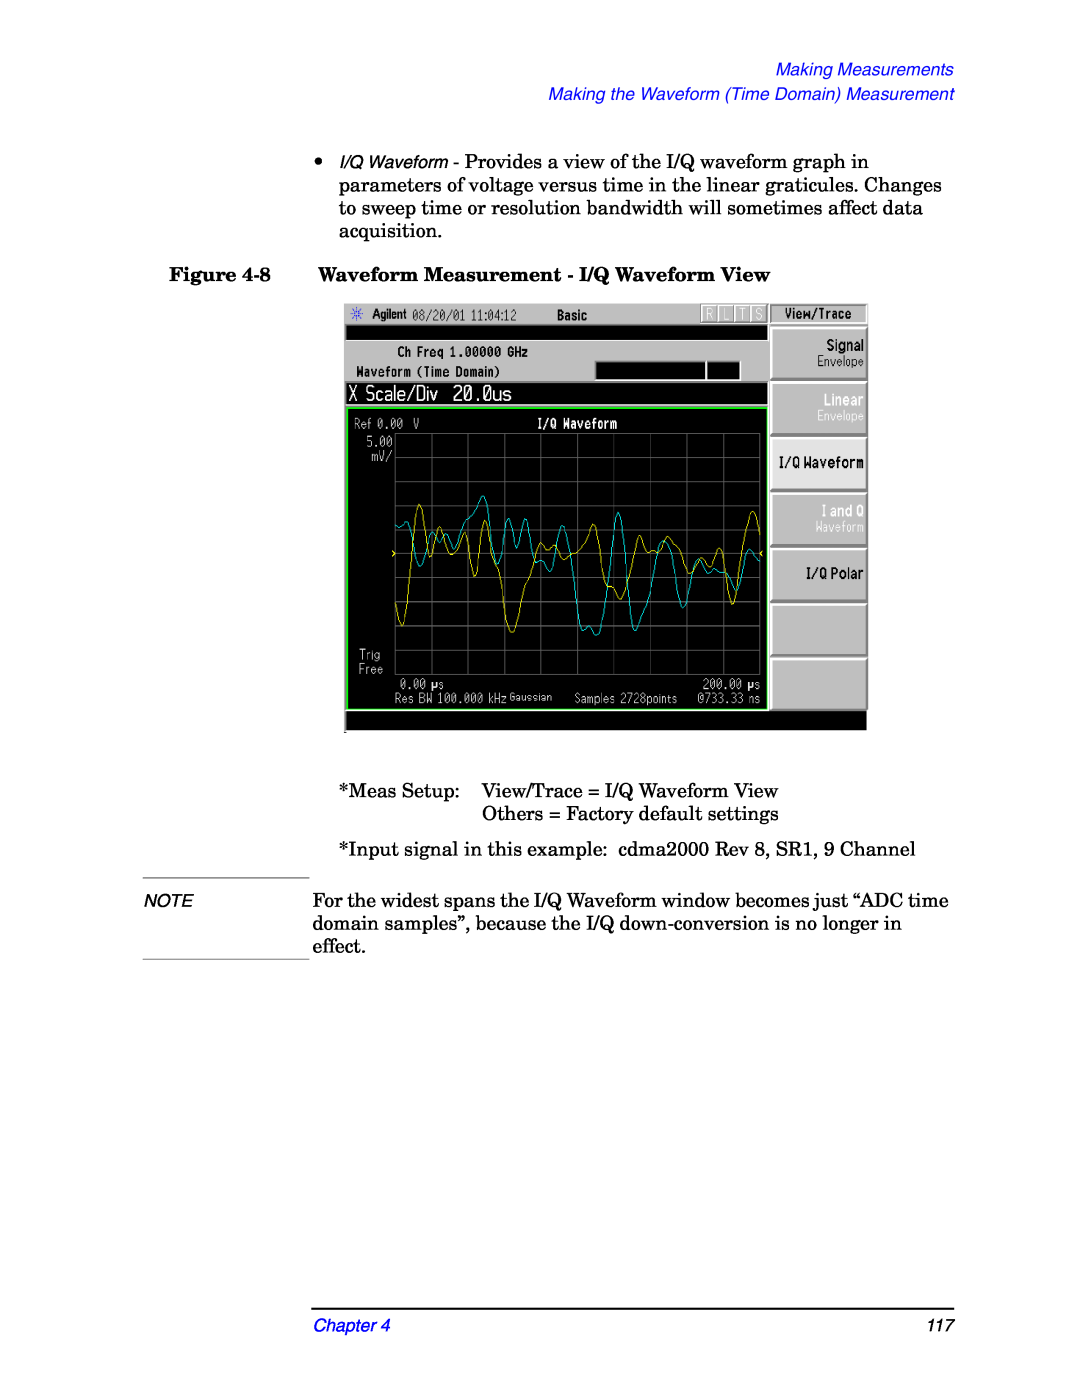 Agilent Technologies E4406A manual Meas Setup: View/Trace = I/Q Waveform View 